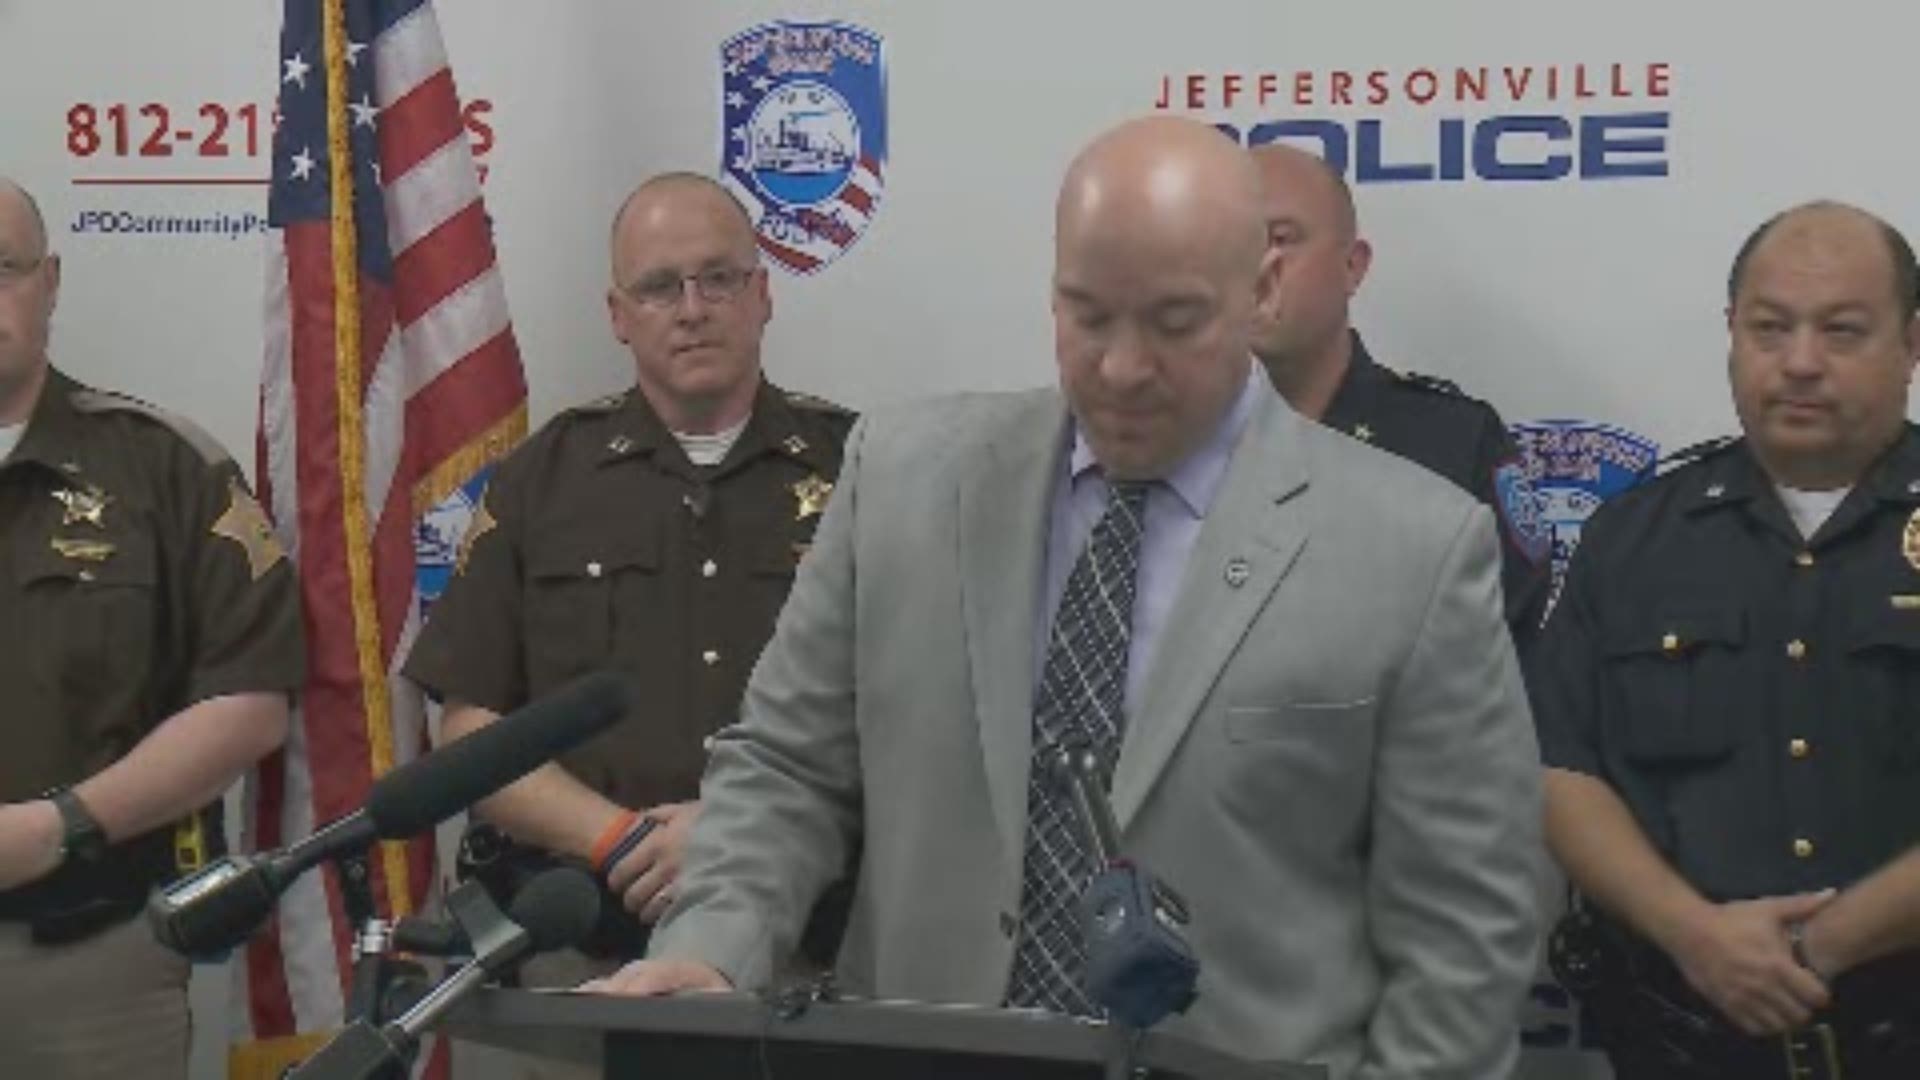 Jeffersonville Police Department briefs media on Thunder Over Louisville plan